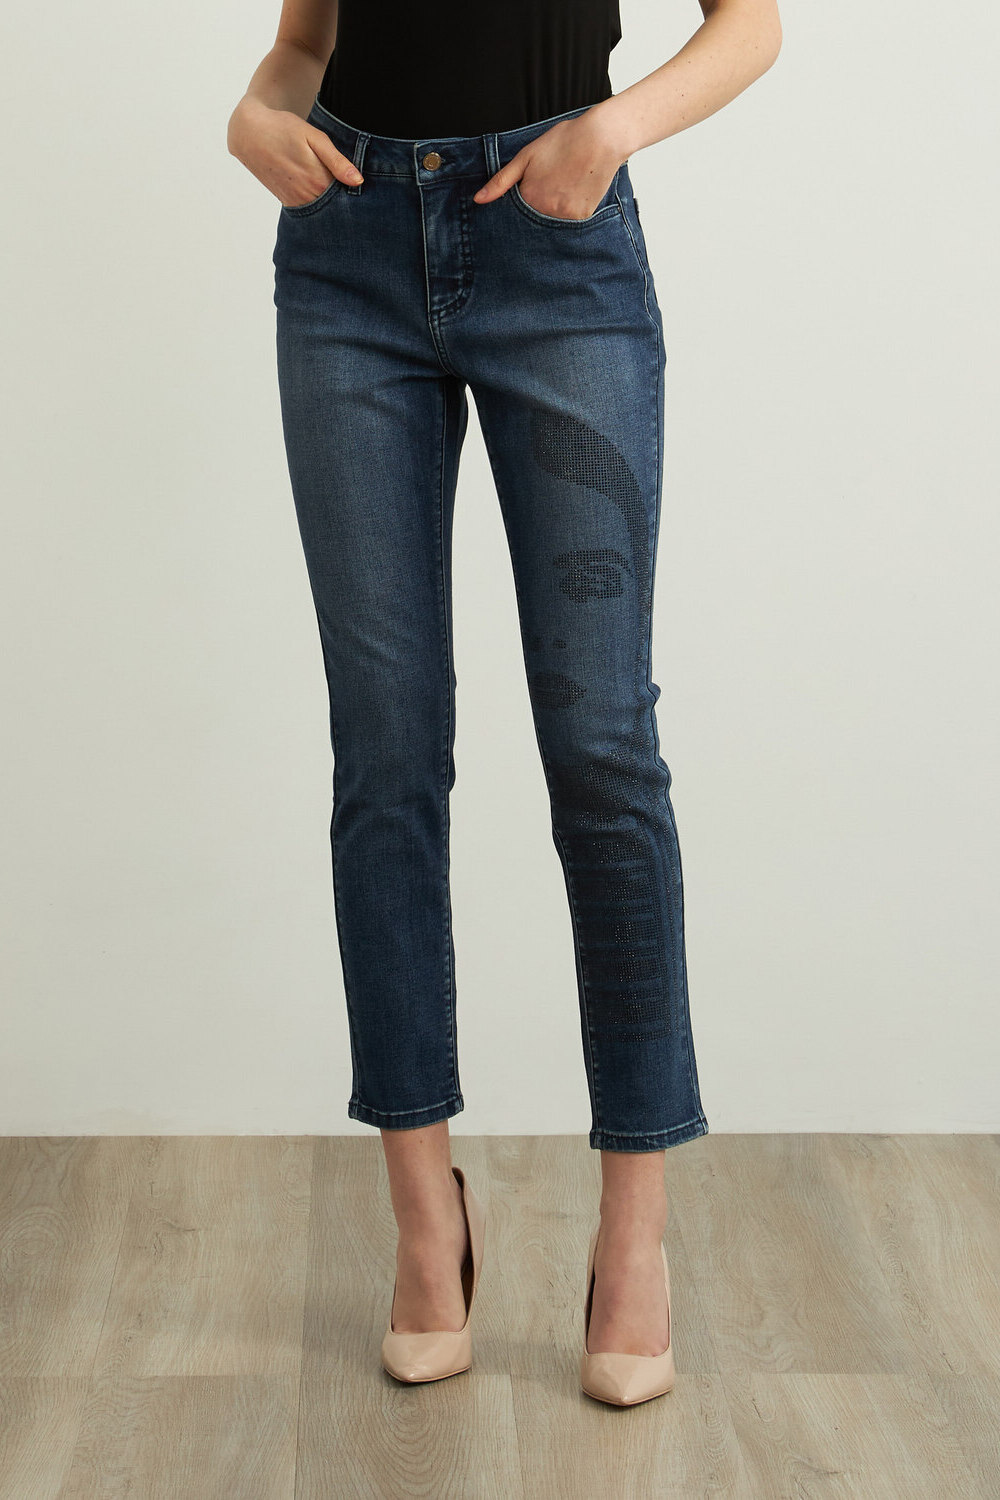 Joseph Ribkoff Slim Fit Jeans Style 213973. Denim Medium Blue